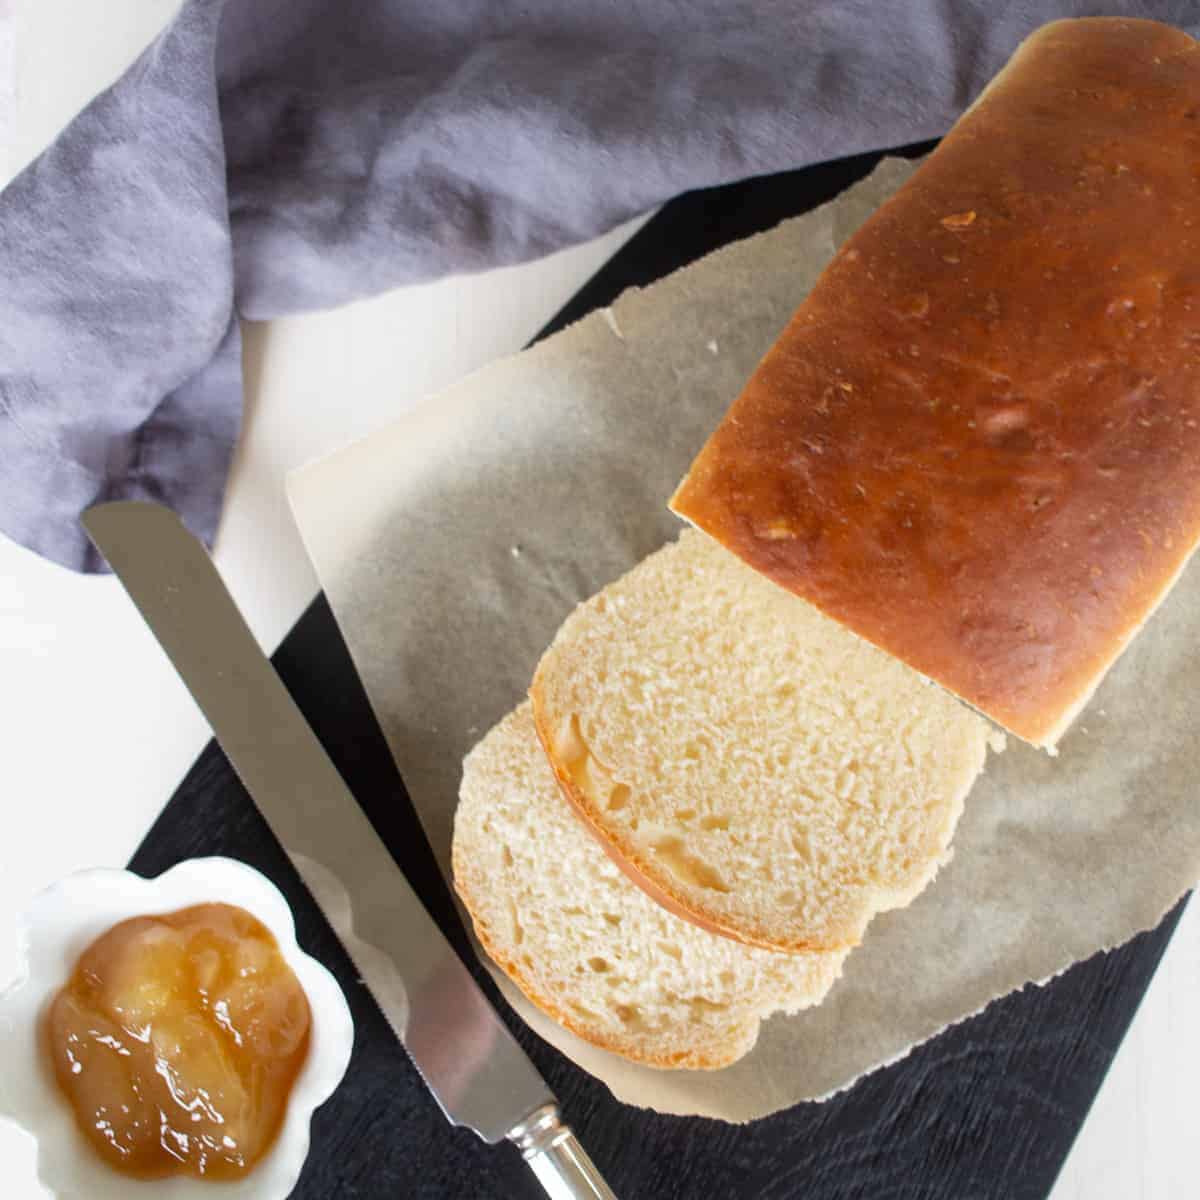 Slice homemade bread.